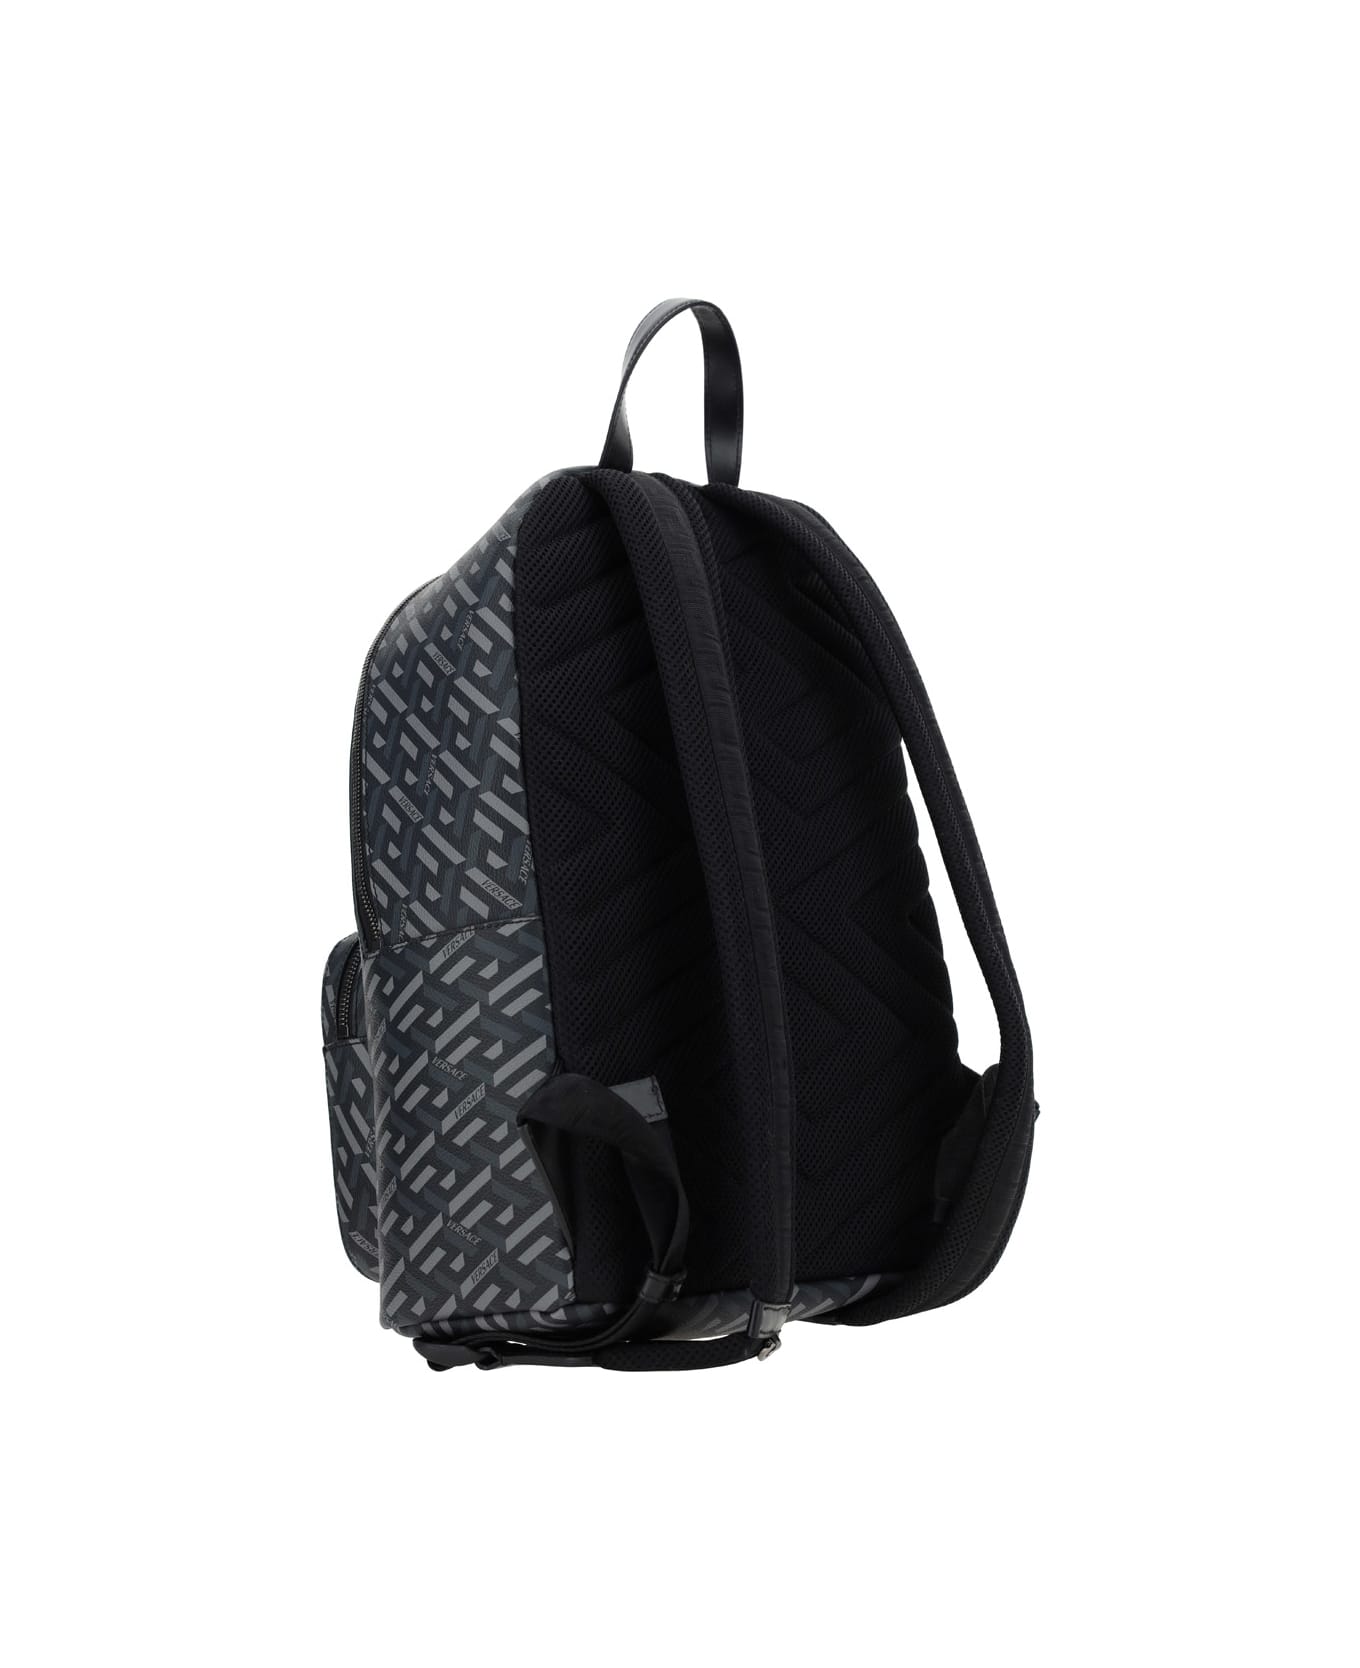 Versace Backpack - Nero+ Grigio-rutenio